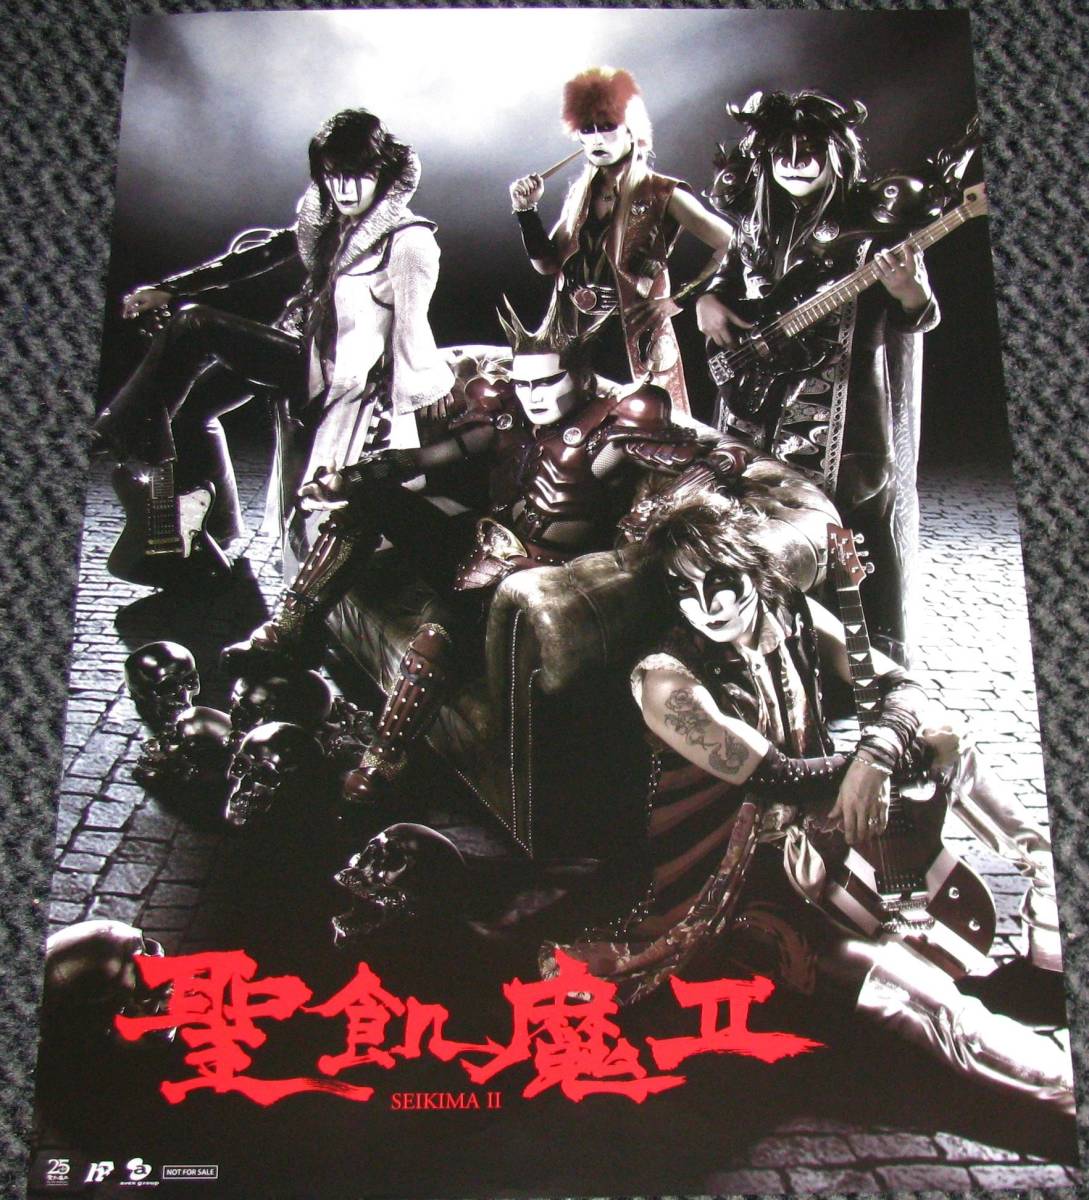  Seikima II not for sale poster Demon . under Demon small .. under 25 anniversary commemoration 